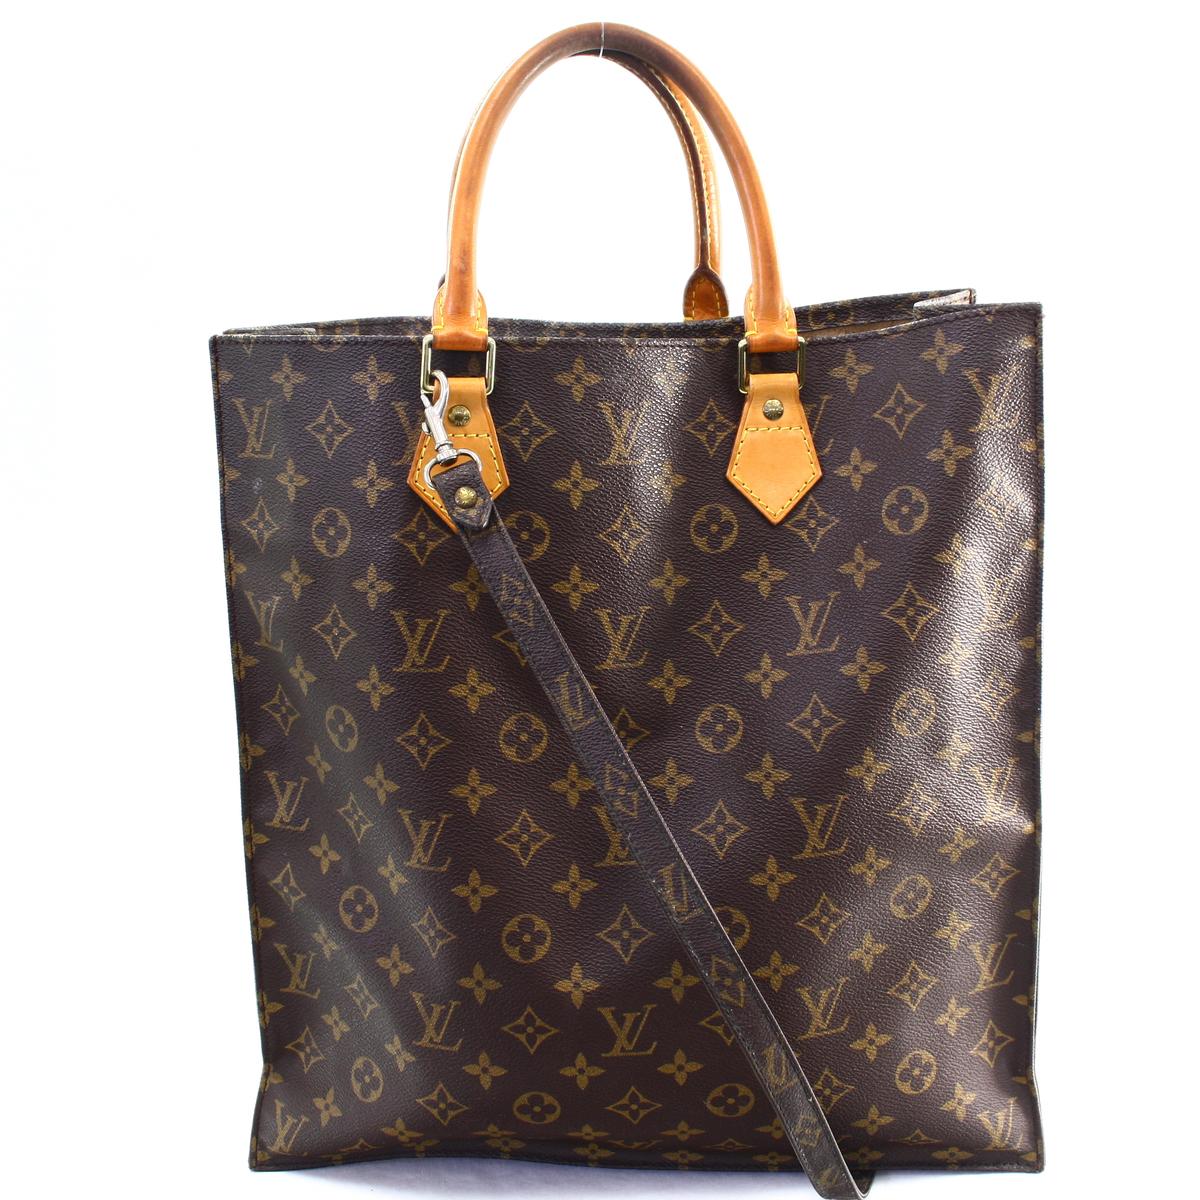 Authentic estate Louis Vuitton monogram canvas & leather Sac Plat tote